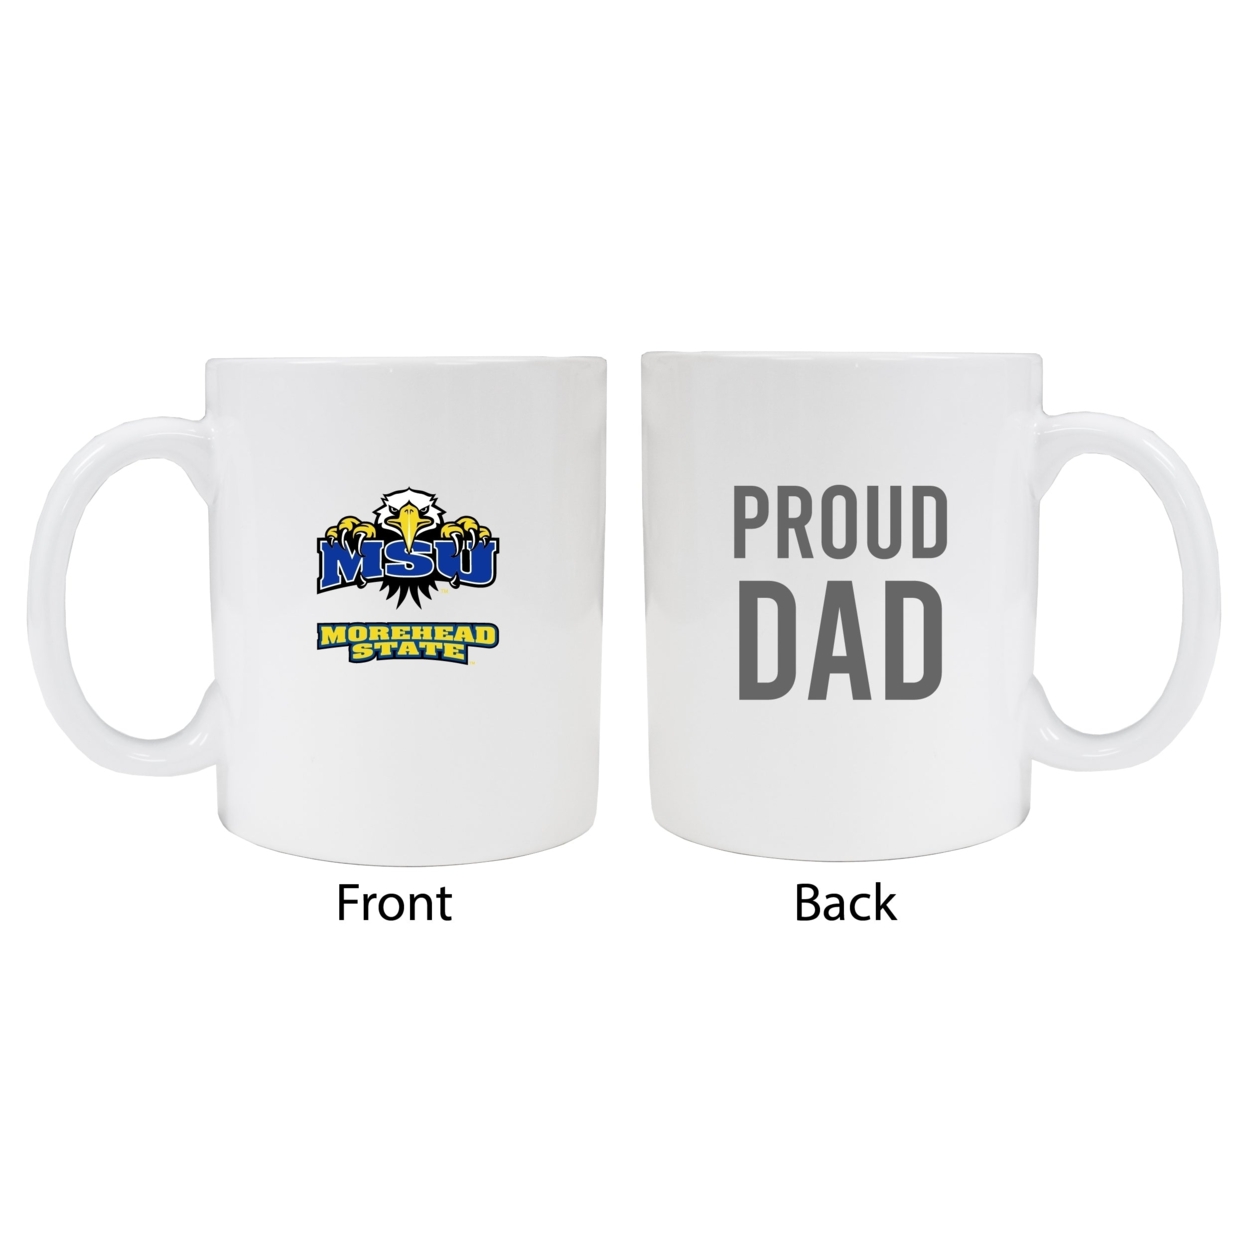 Morehead State University Proud Dad Ceramic Coffee Mug - White